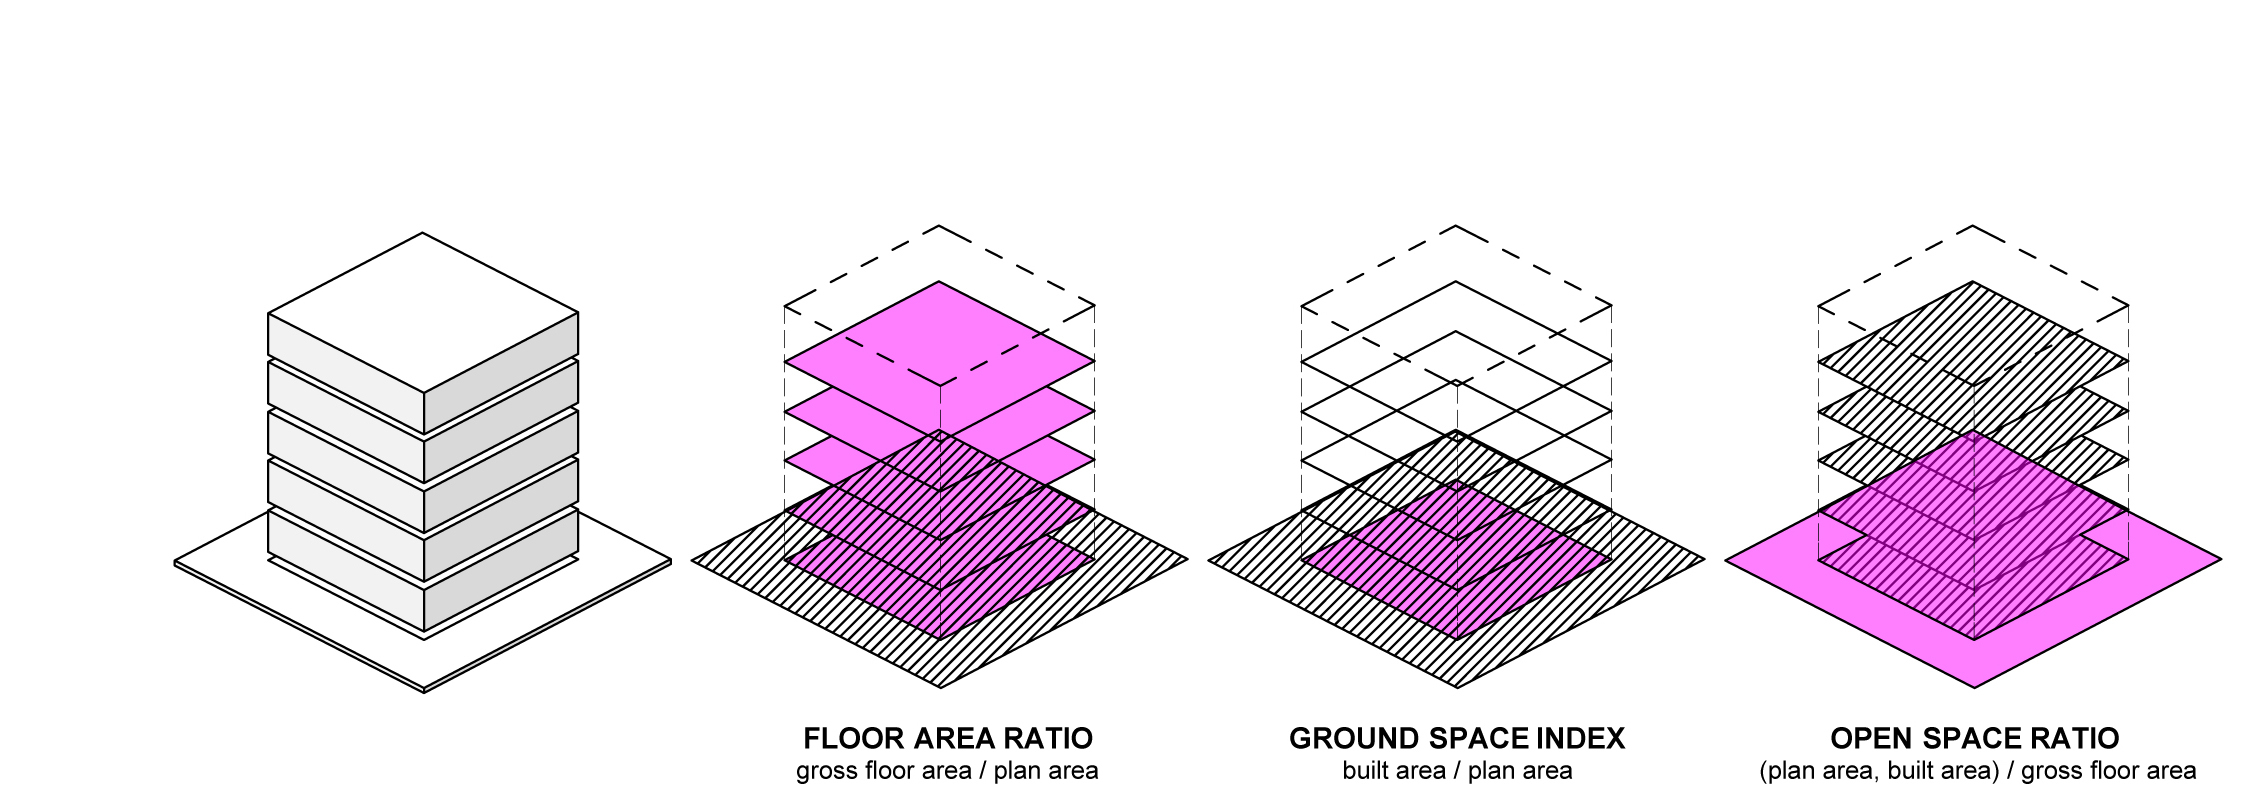 Floor areas